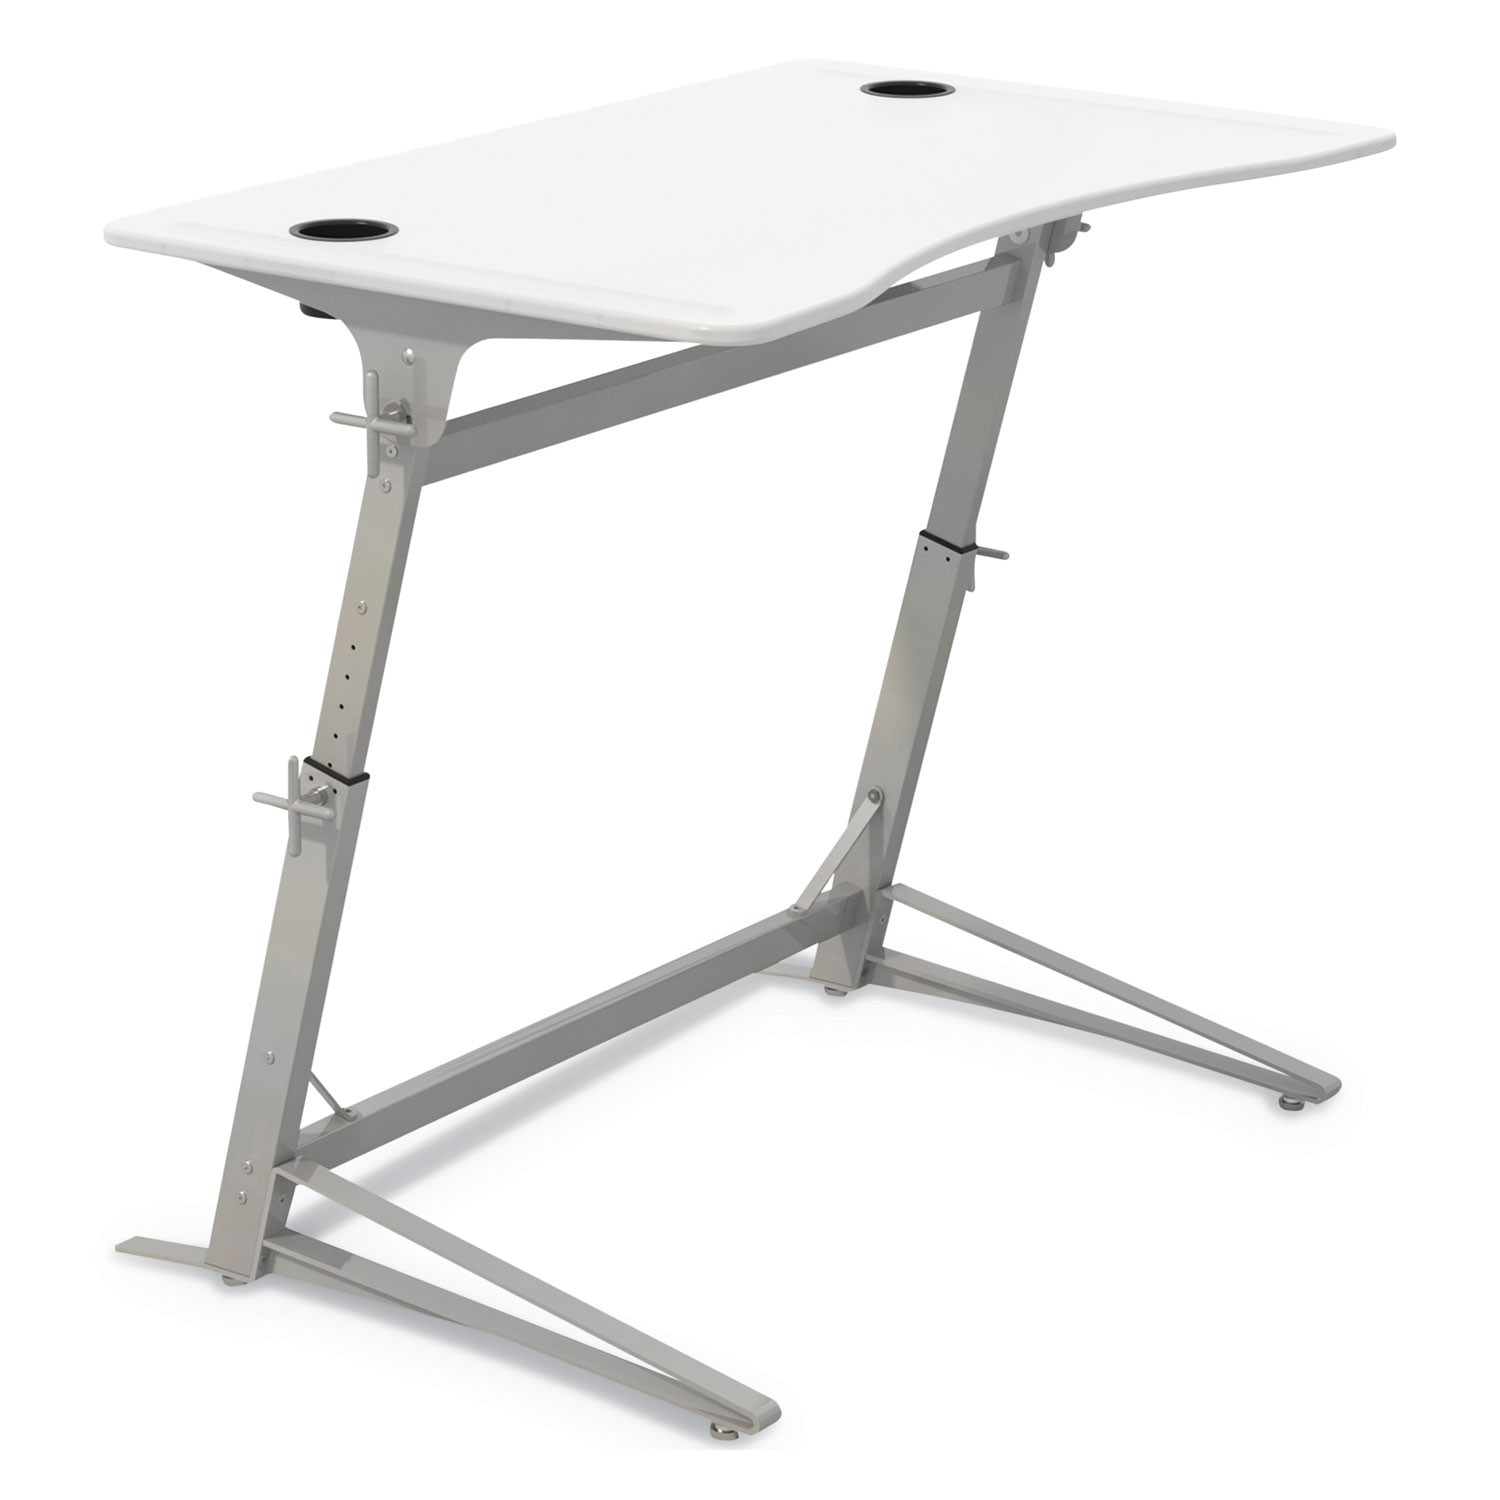  Safco 1959WH Verve Standing Desk, 47.25w x 31.75d x 42h, White (SAF1959WH) 